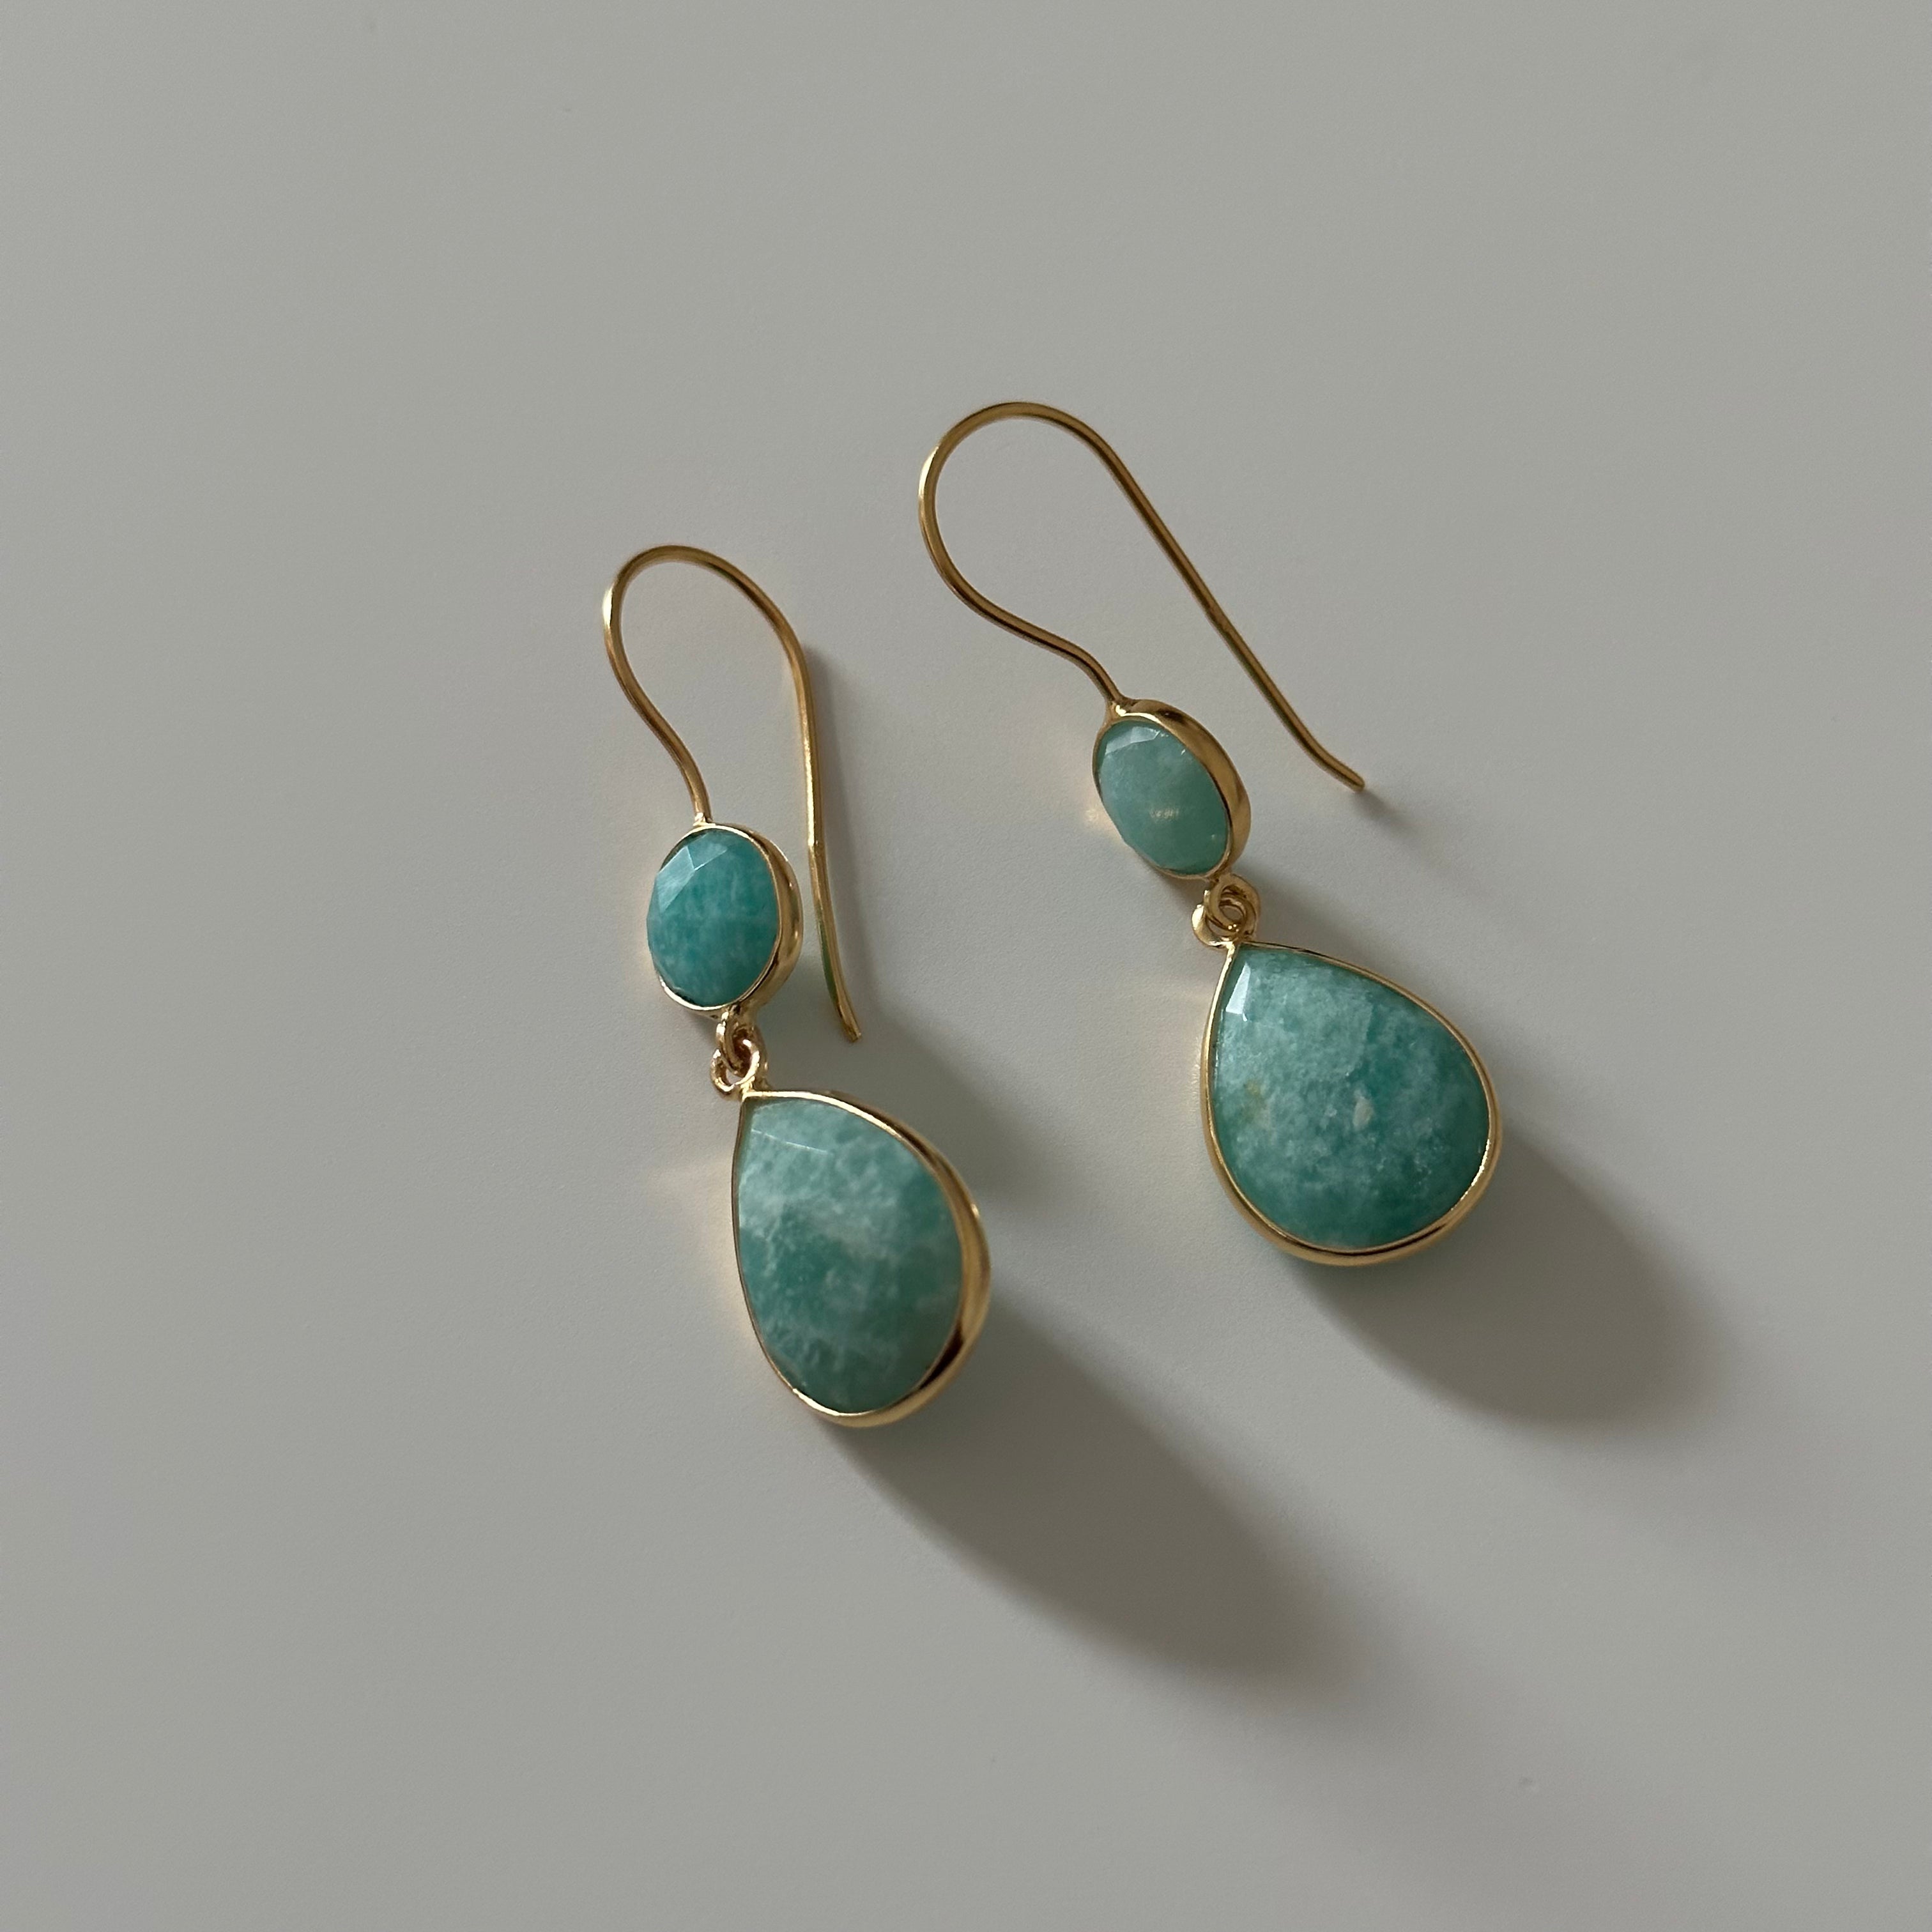 Amazonite Gemstone Two Stone Earrings in Gold Plated Sterling Silver - Teardrop